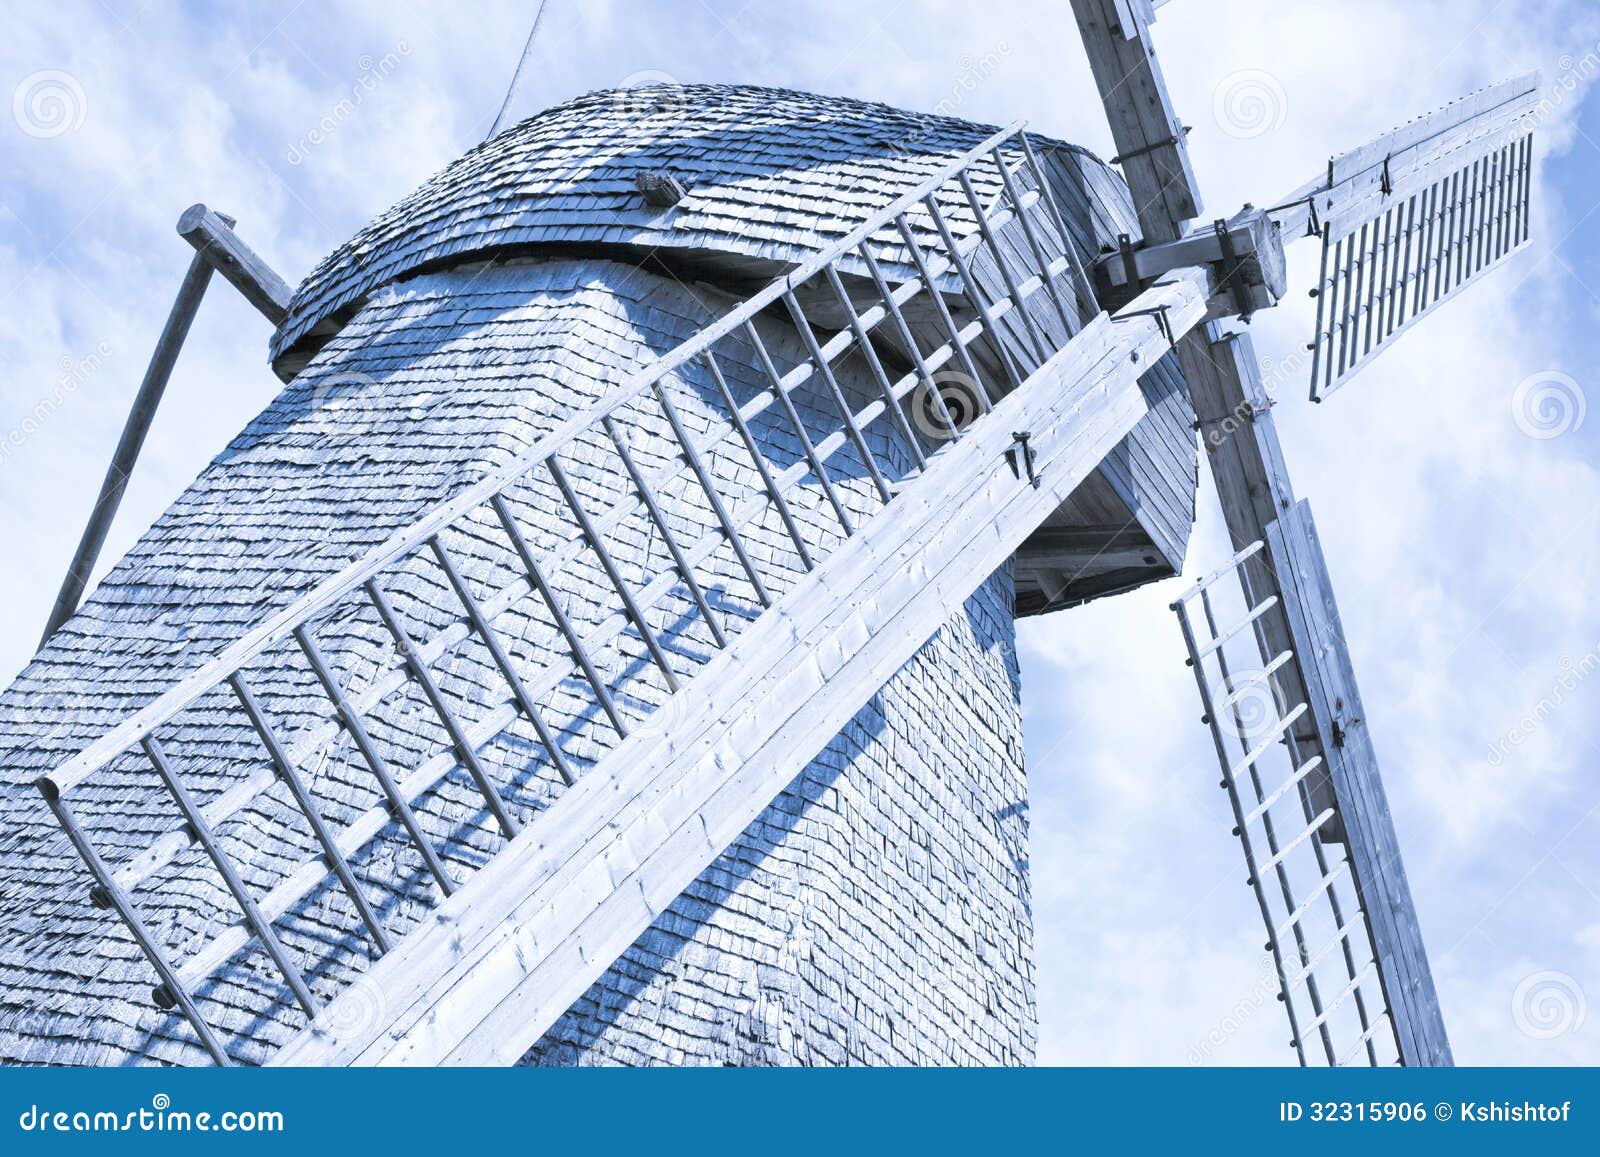 Windmill Royalty Free Stock Image - Image: 32315906